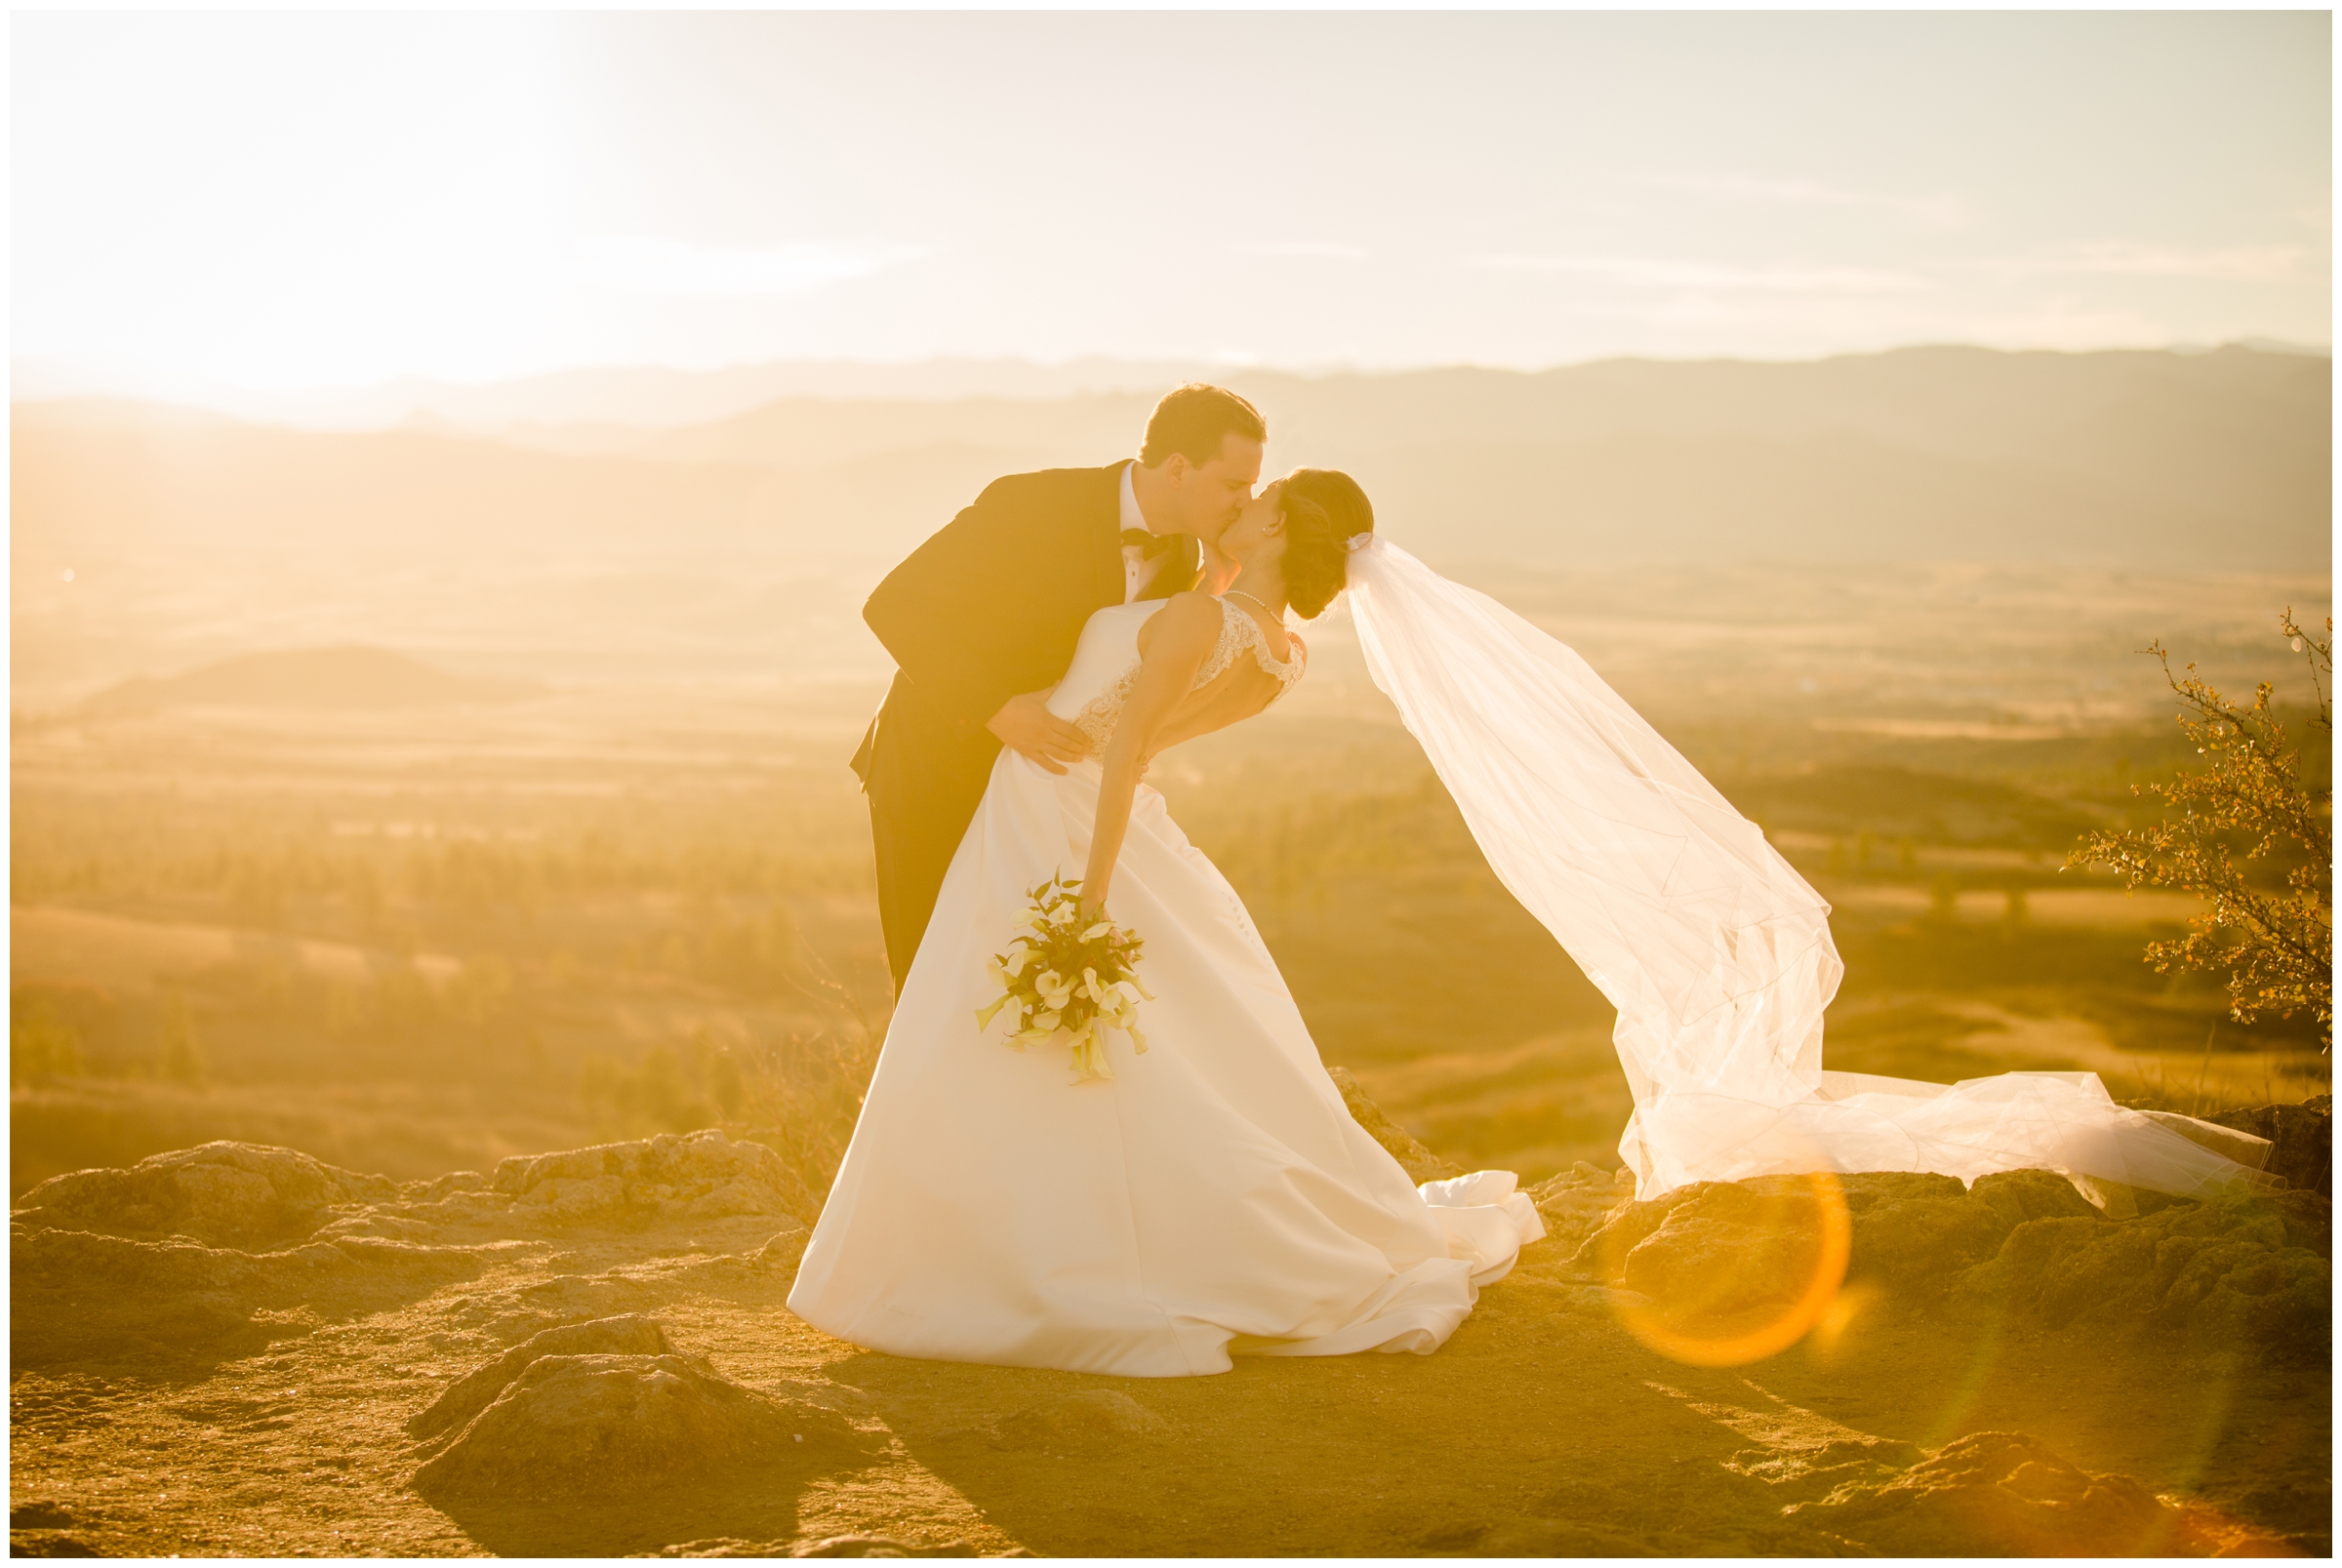 Cielo Castle Pines wedding photos by Colorado photographer Plum Pretty Photography